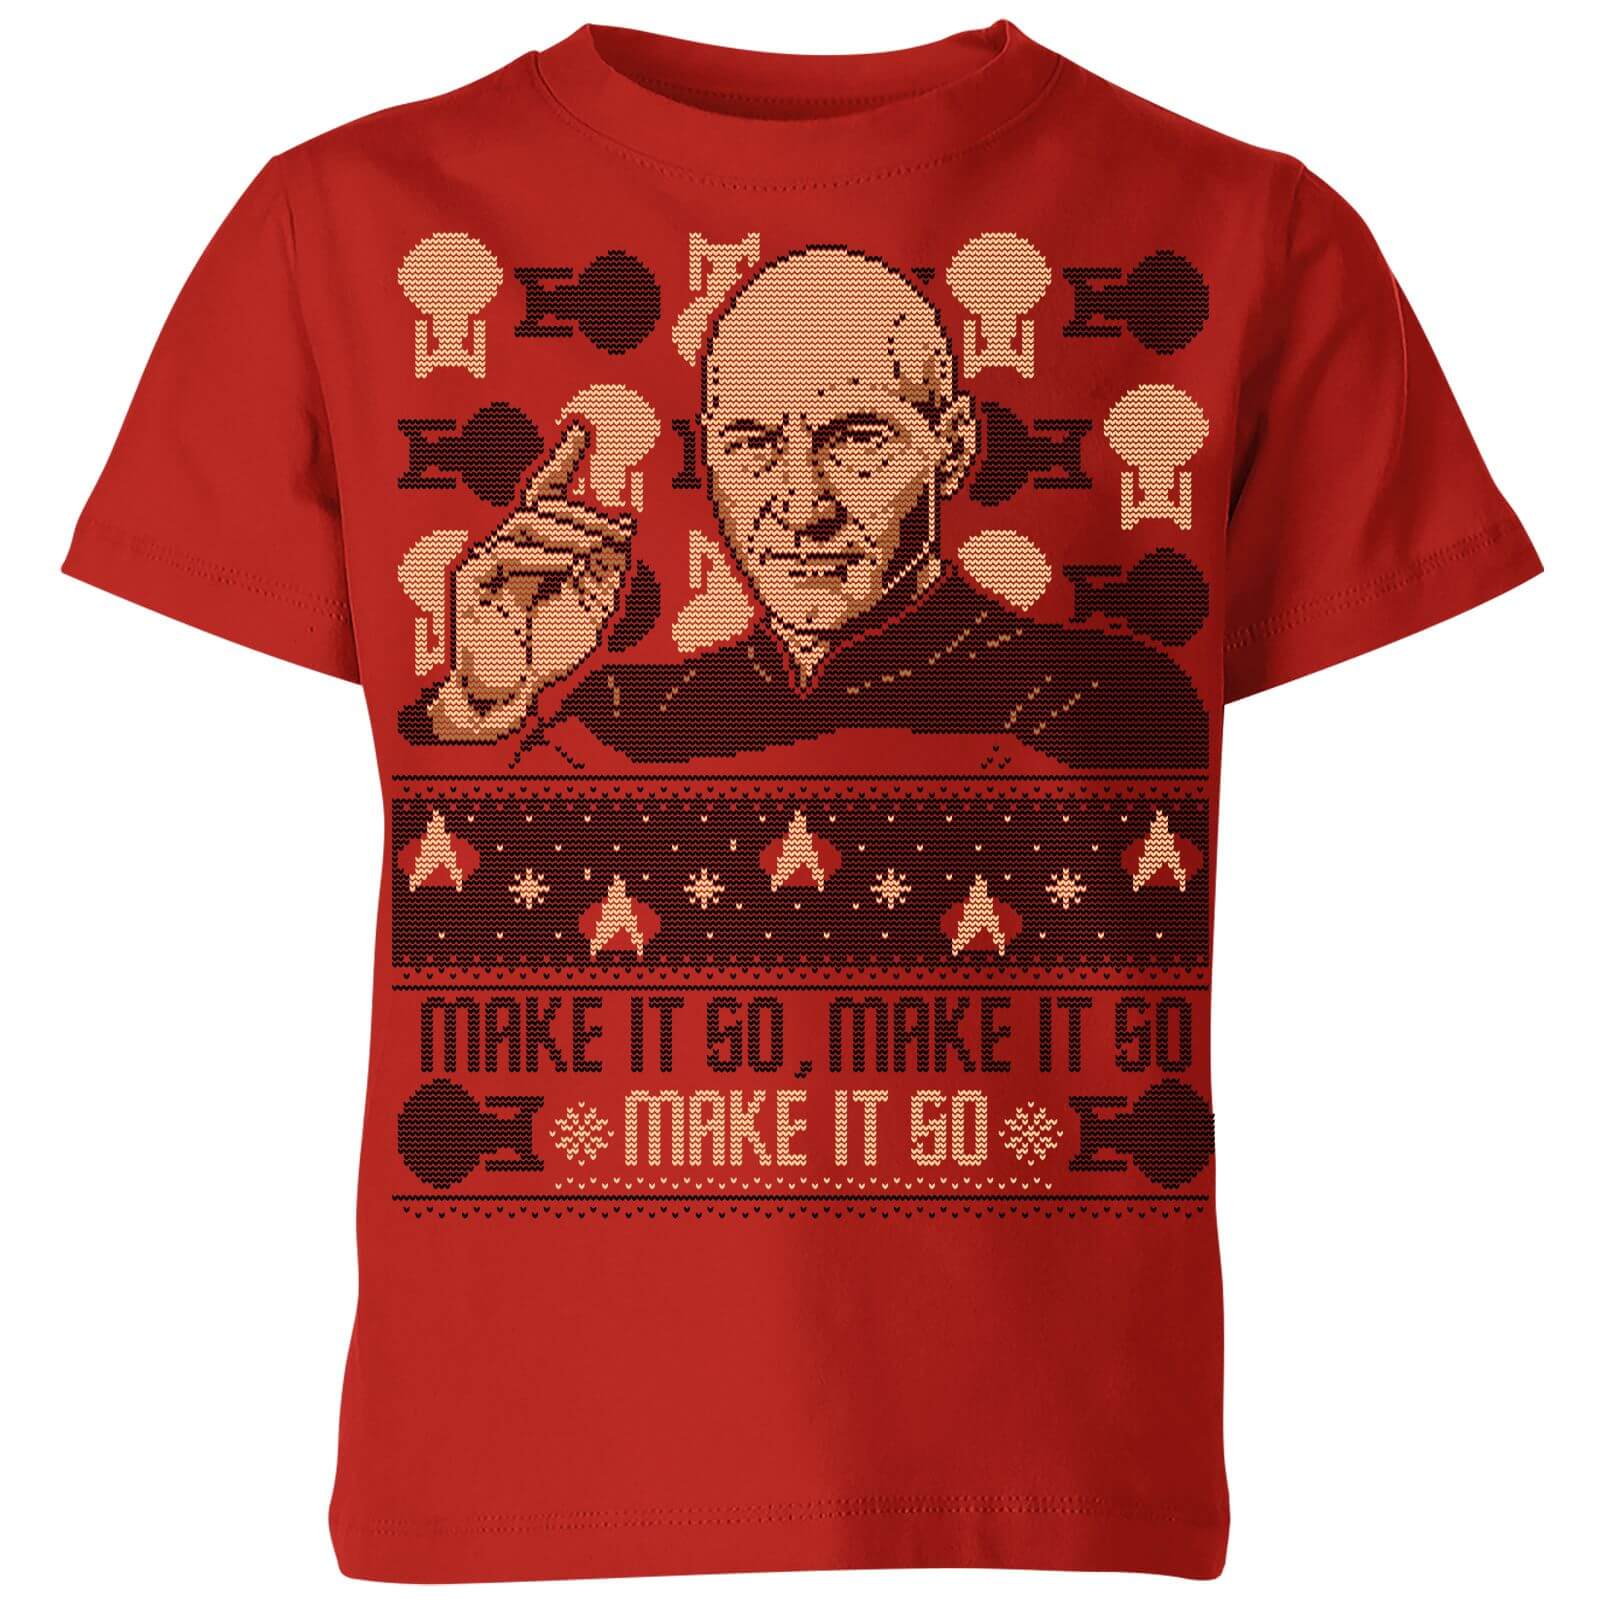 Star Trek: The Next Generation Make It So Kids' Christmas T-Shirt - Red - 5-6 Years